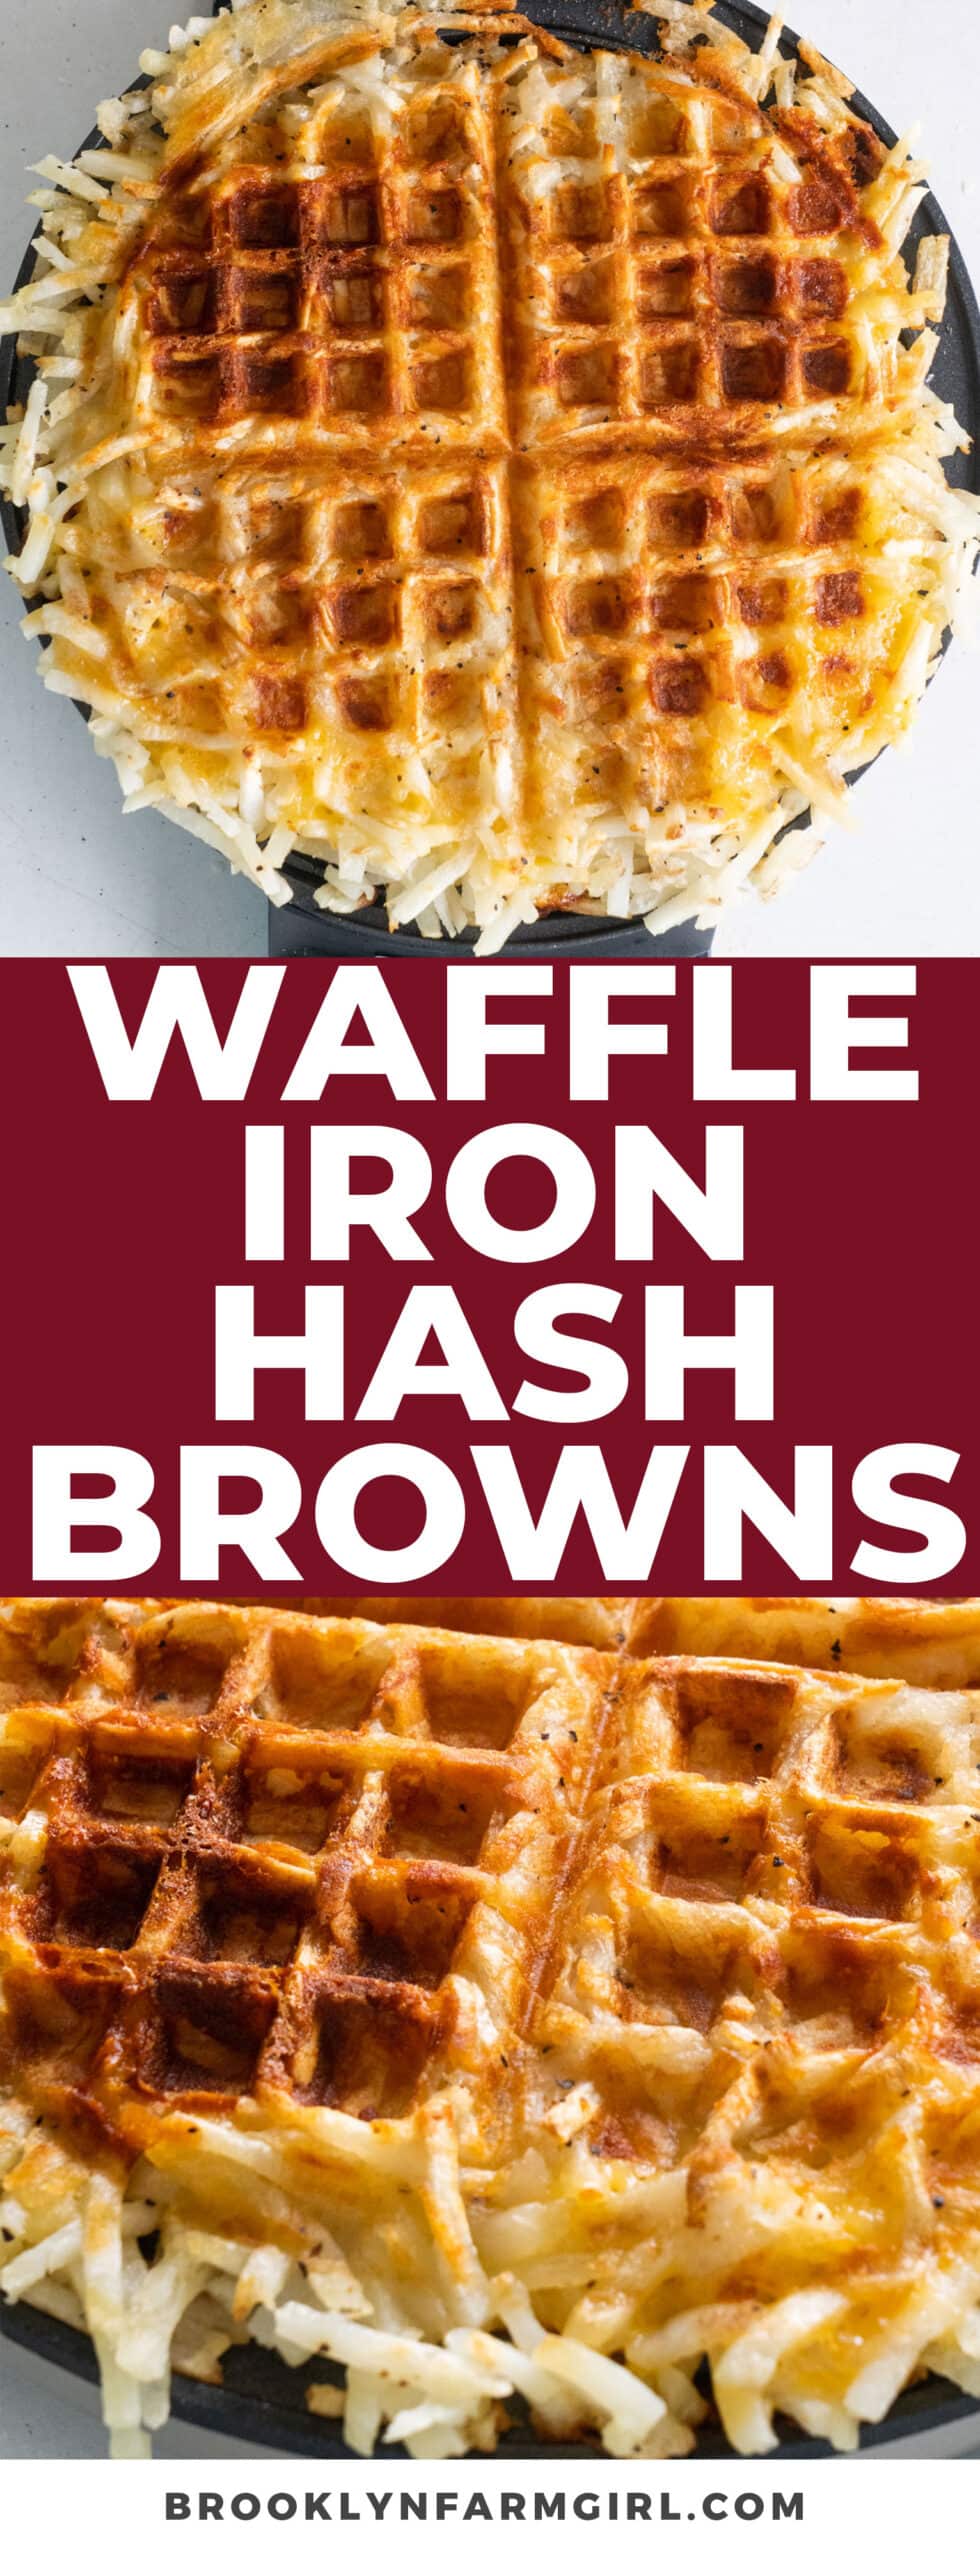 https://brooklynfarmgirl.com/wp-content/uploads/2022/03/Waffle-Iron-Hash-Browns-1-scaled.jpg